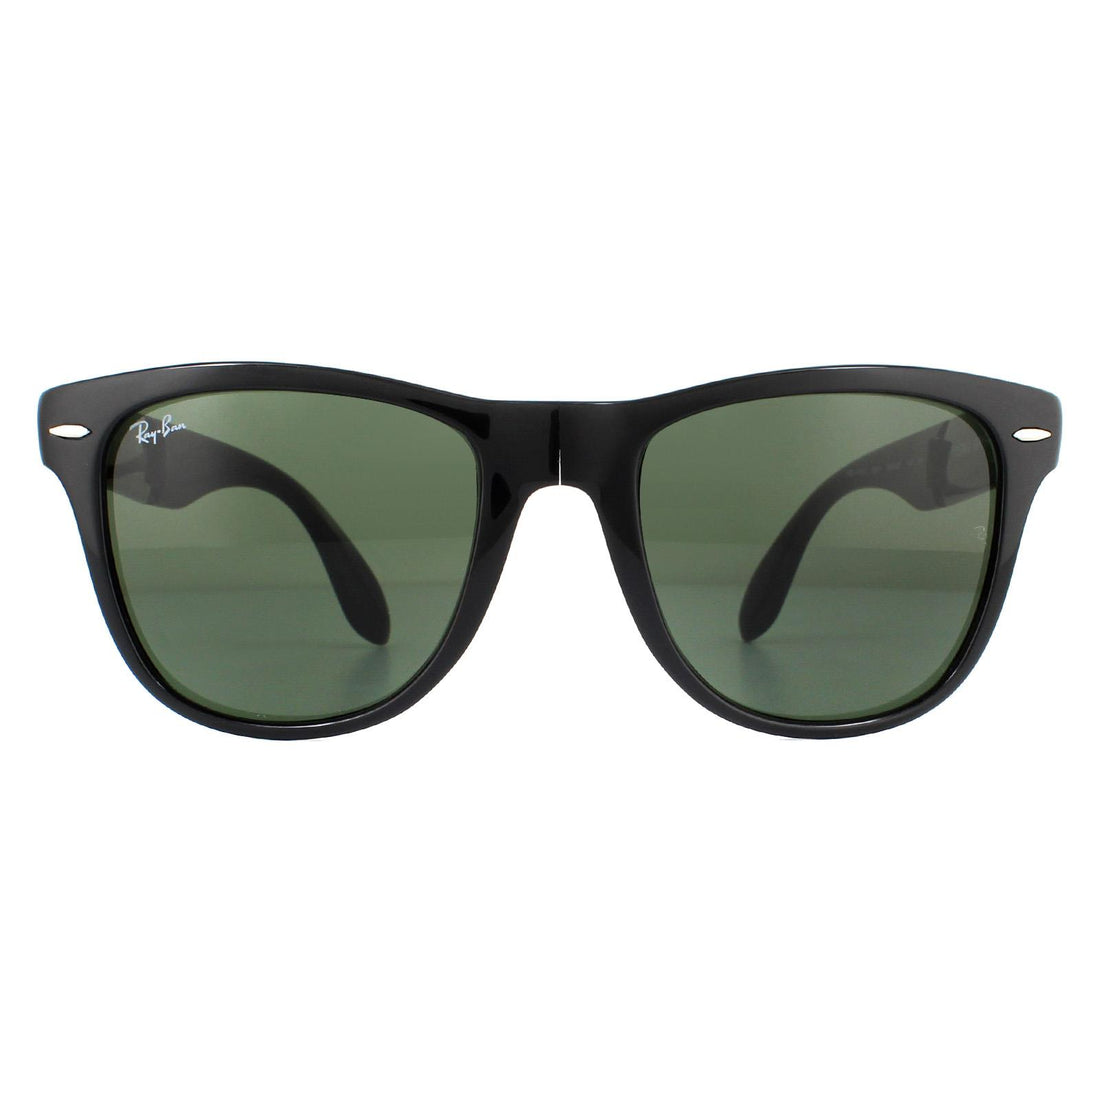 Ray-Ban Folding Wayfarer RB4105 Sunglasses Black Green 54